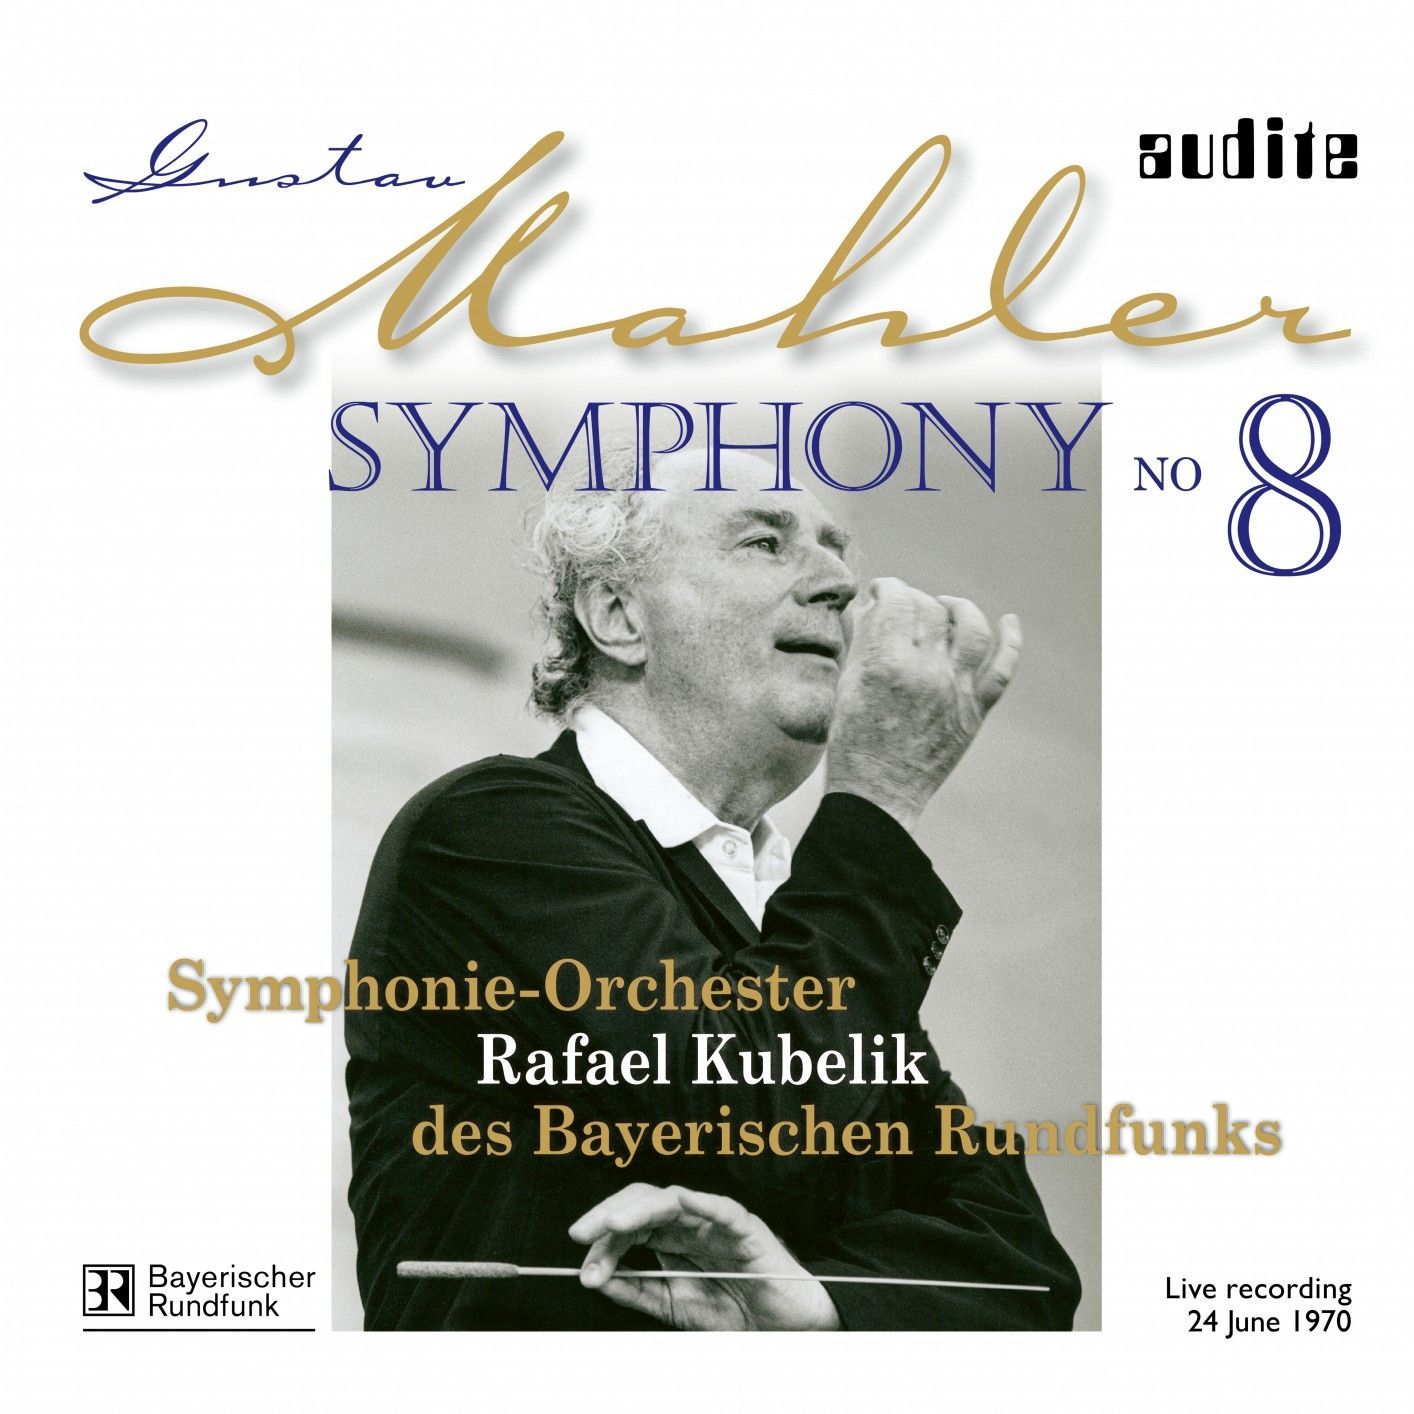 R.Kubelik, Symphonie-Orchester Des Bayerischen Rundfunks Symphony No.8 (LP)